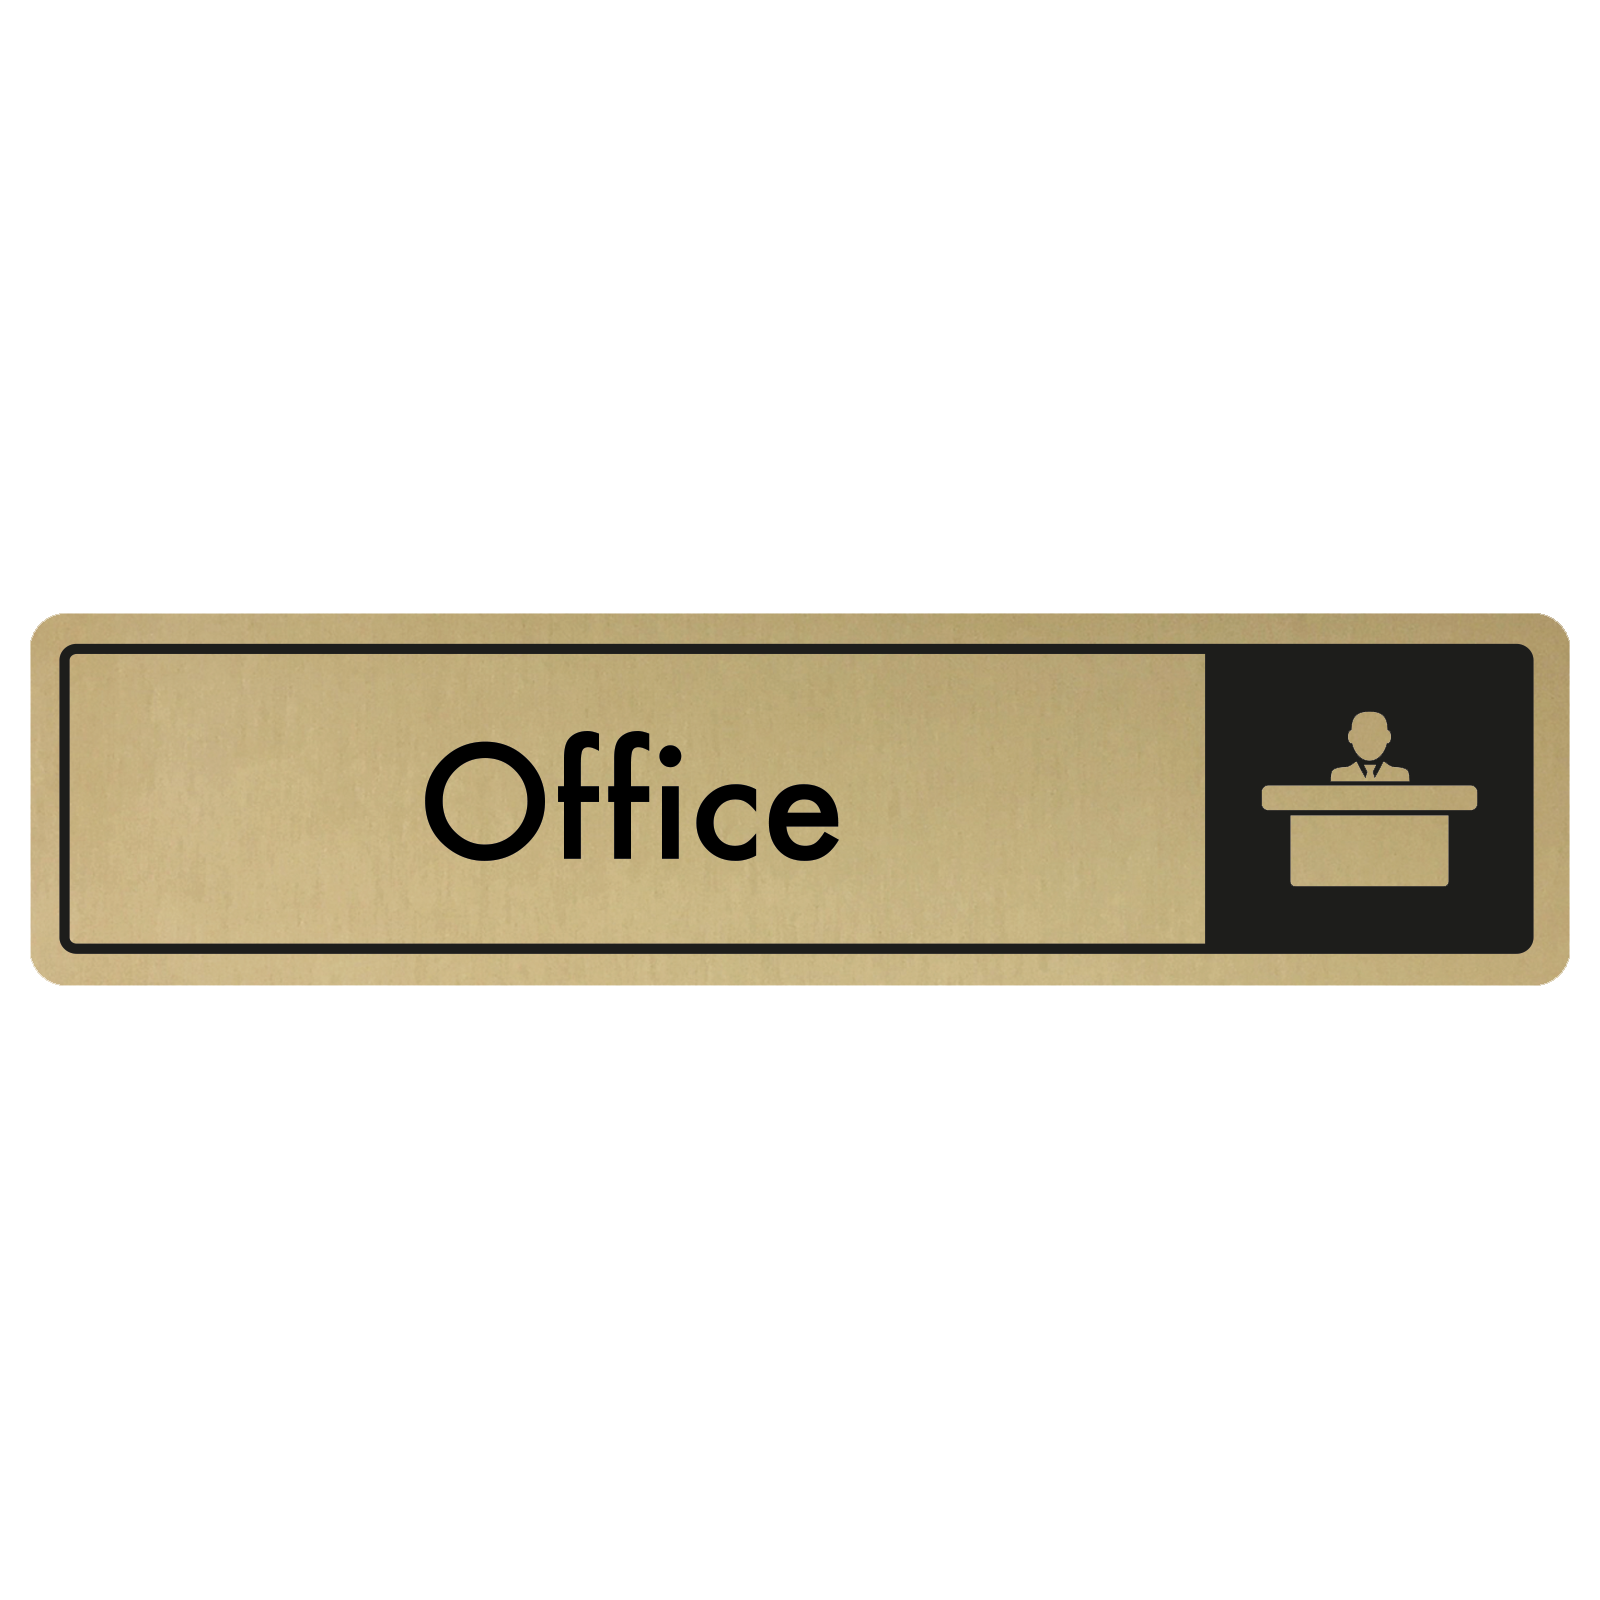 Office Door Sign - Black on Gold